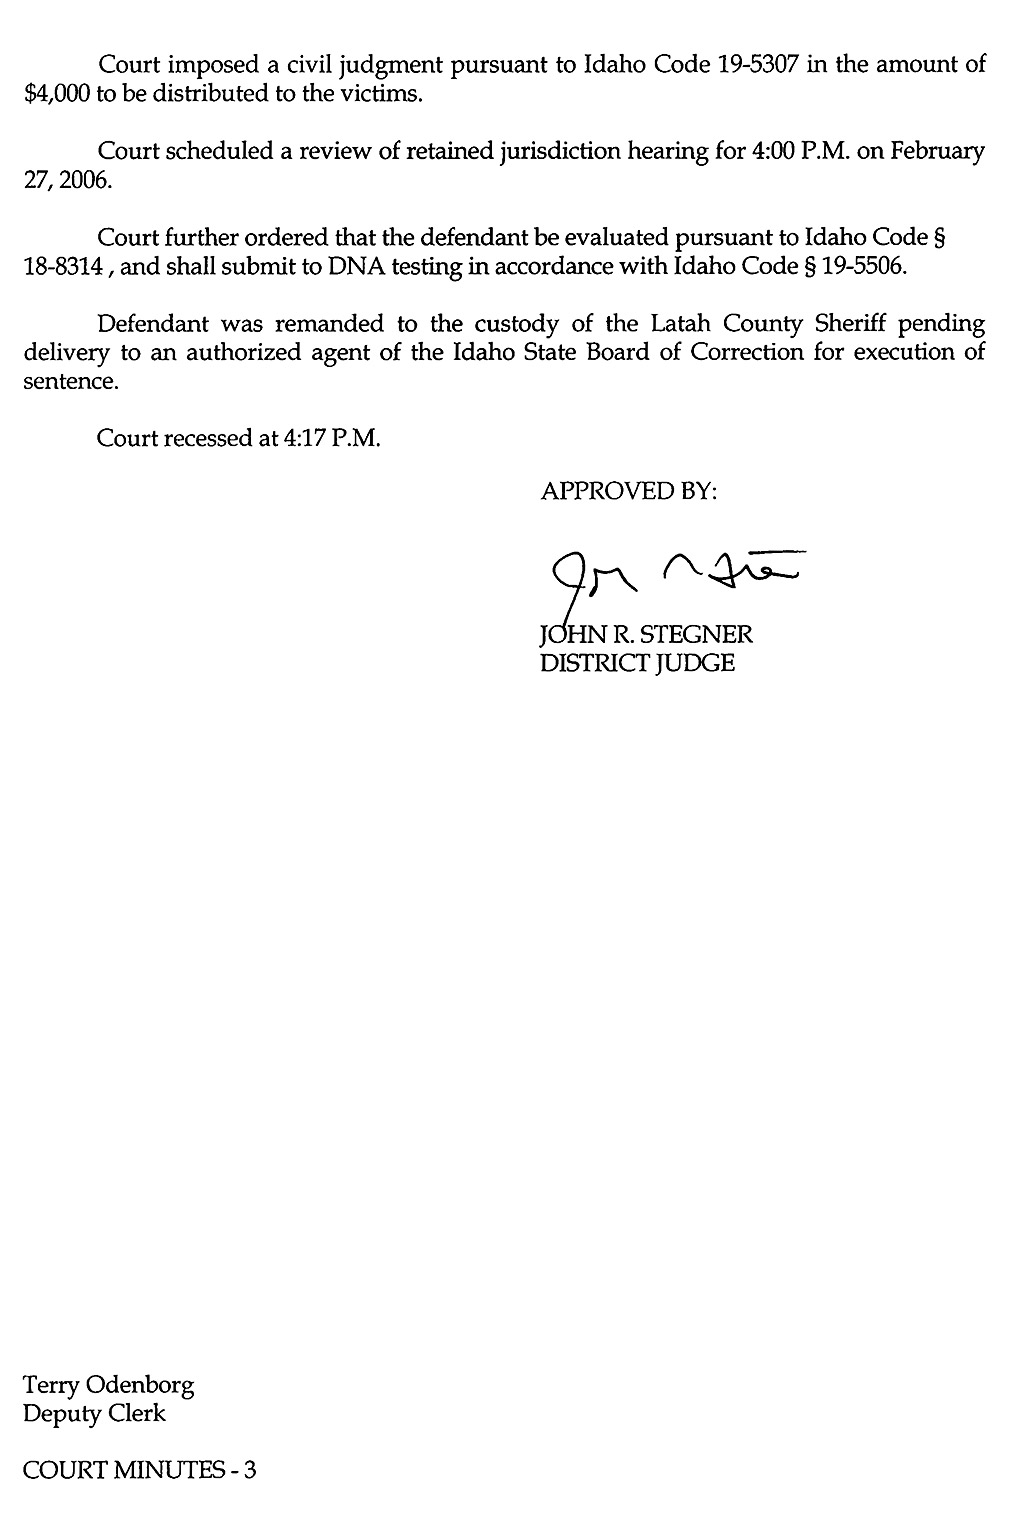 Steven Sitler: Court Minutes, Sentencing, page 3